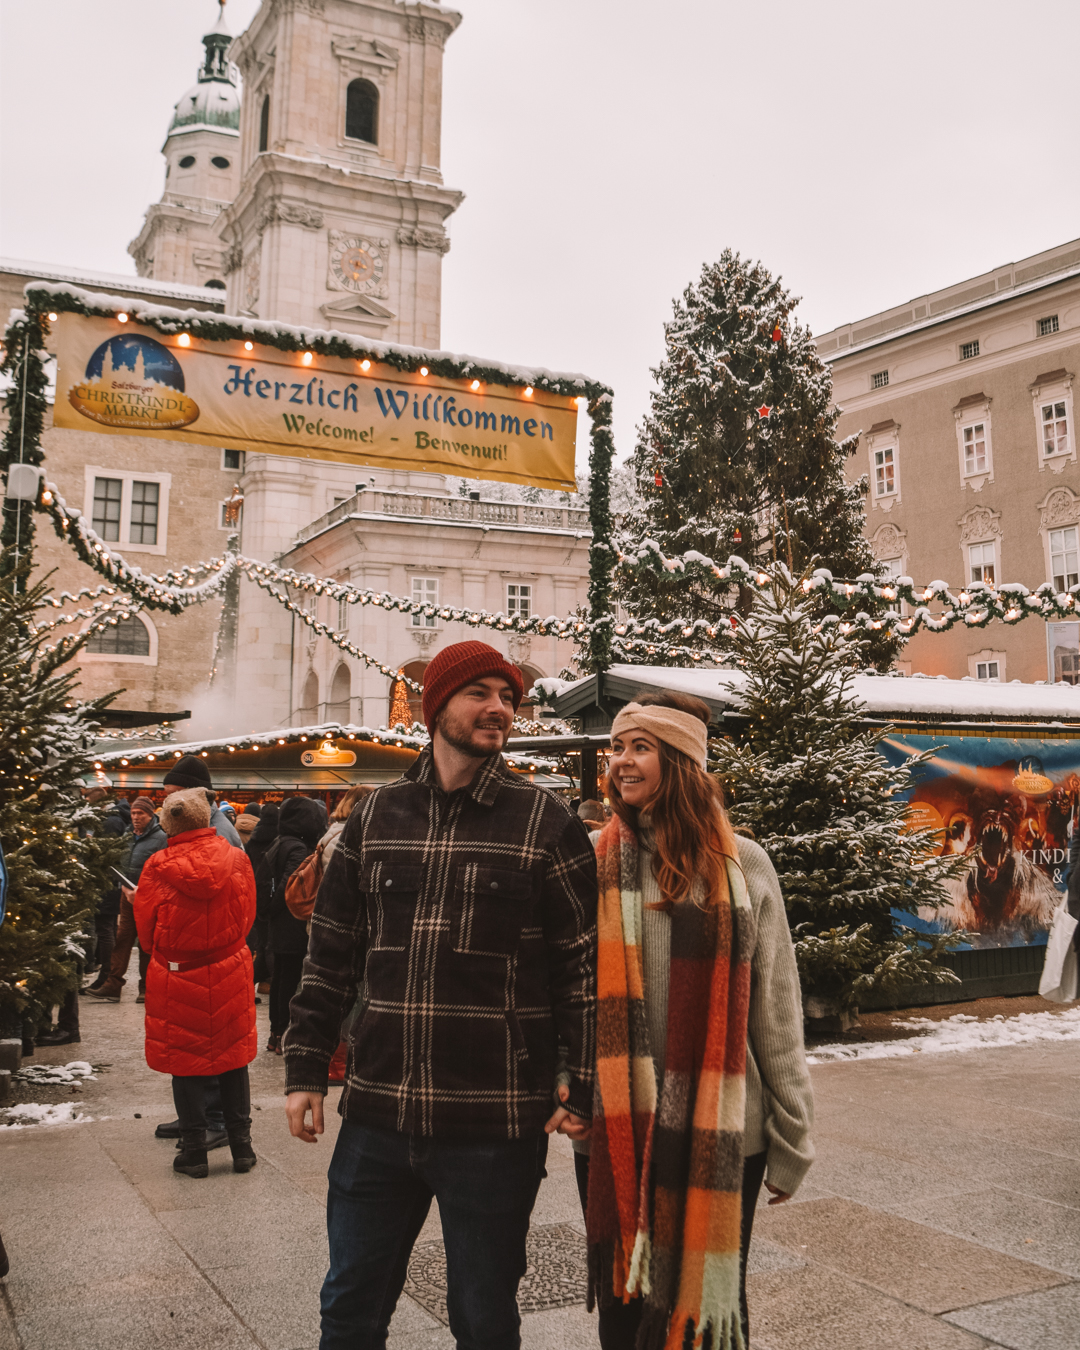 Austria at Christmas - The Best Austrian Christmas Markets